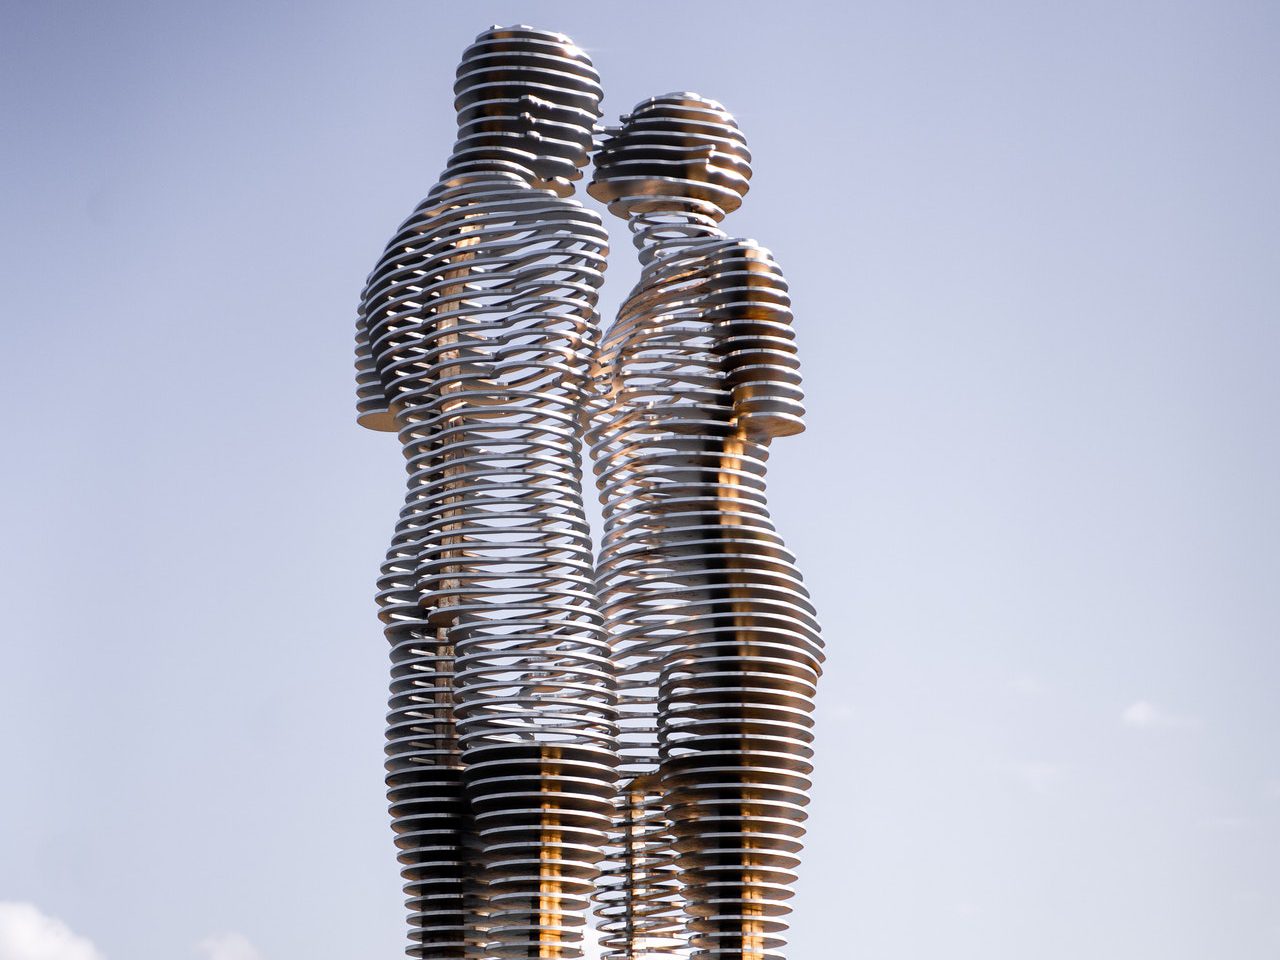 Statue of Love in Batumi, Georgia